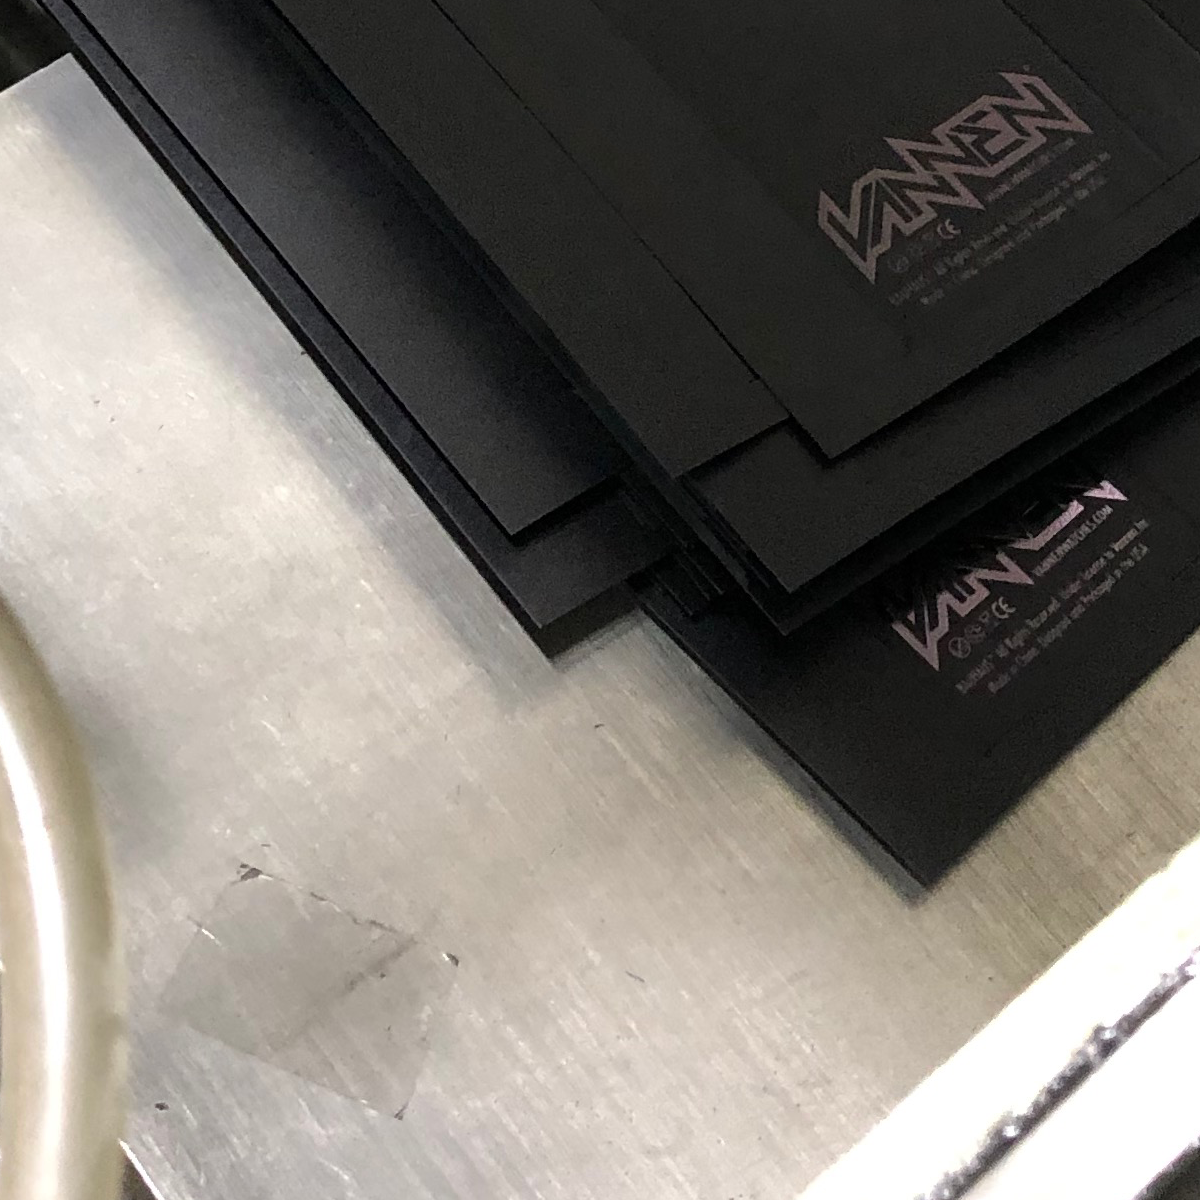 Bauhaus x Vannen World Goth Day exclusive Packaging Teaser